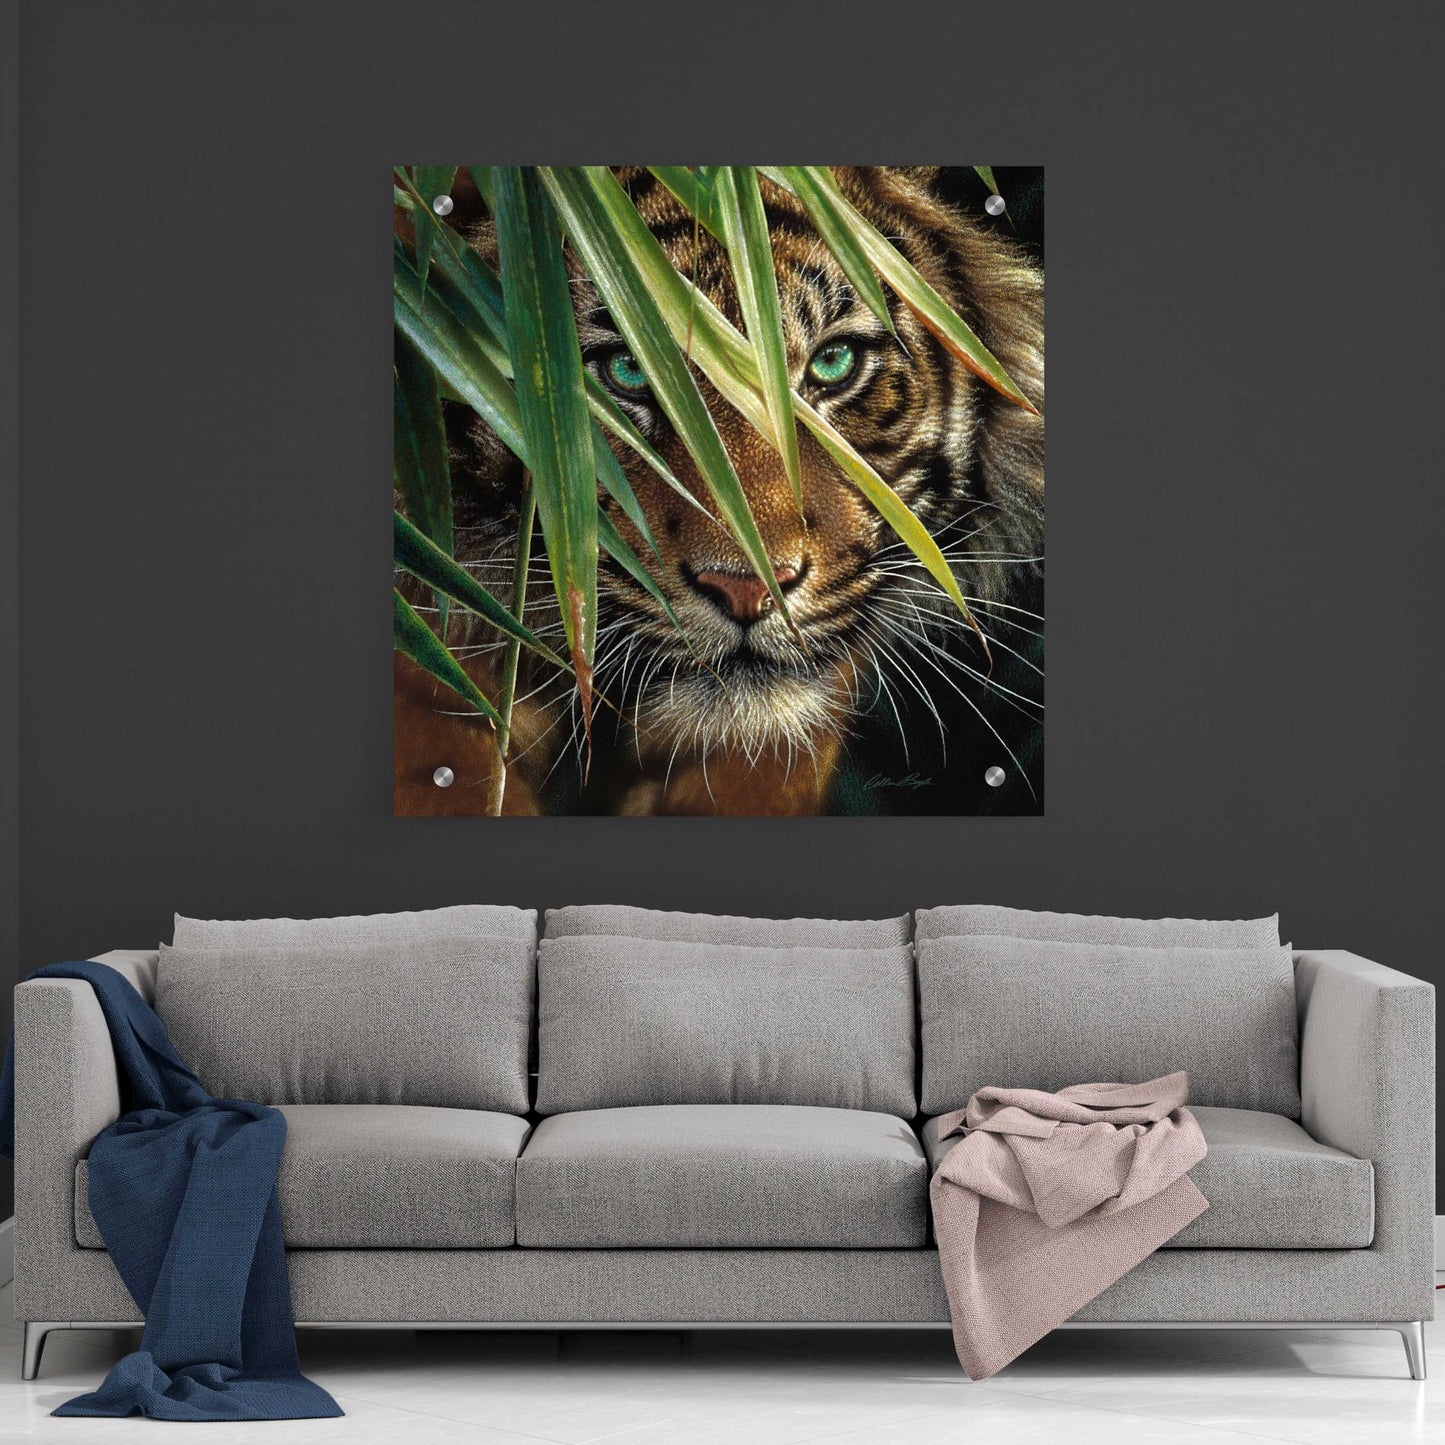 Epic Art 'Tiger Eyes' by Collin Bogle Acrylic Glass Wall Art,36x36